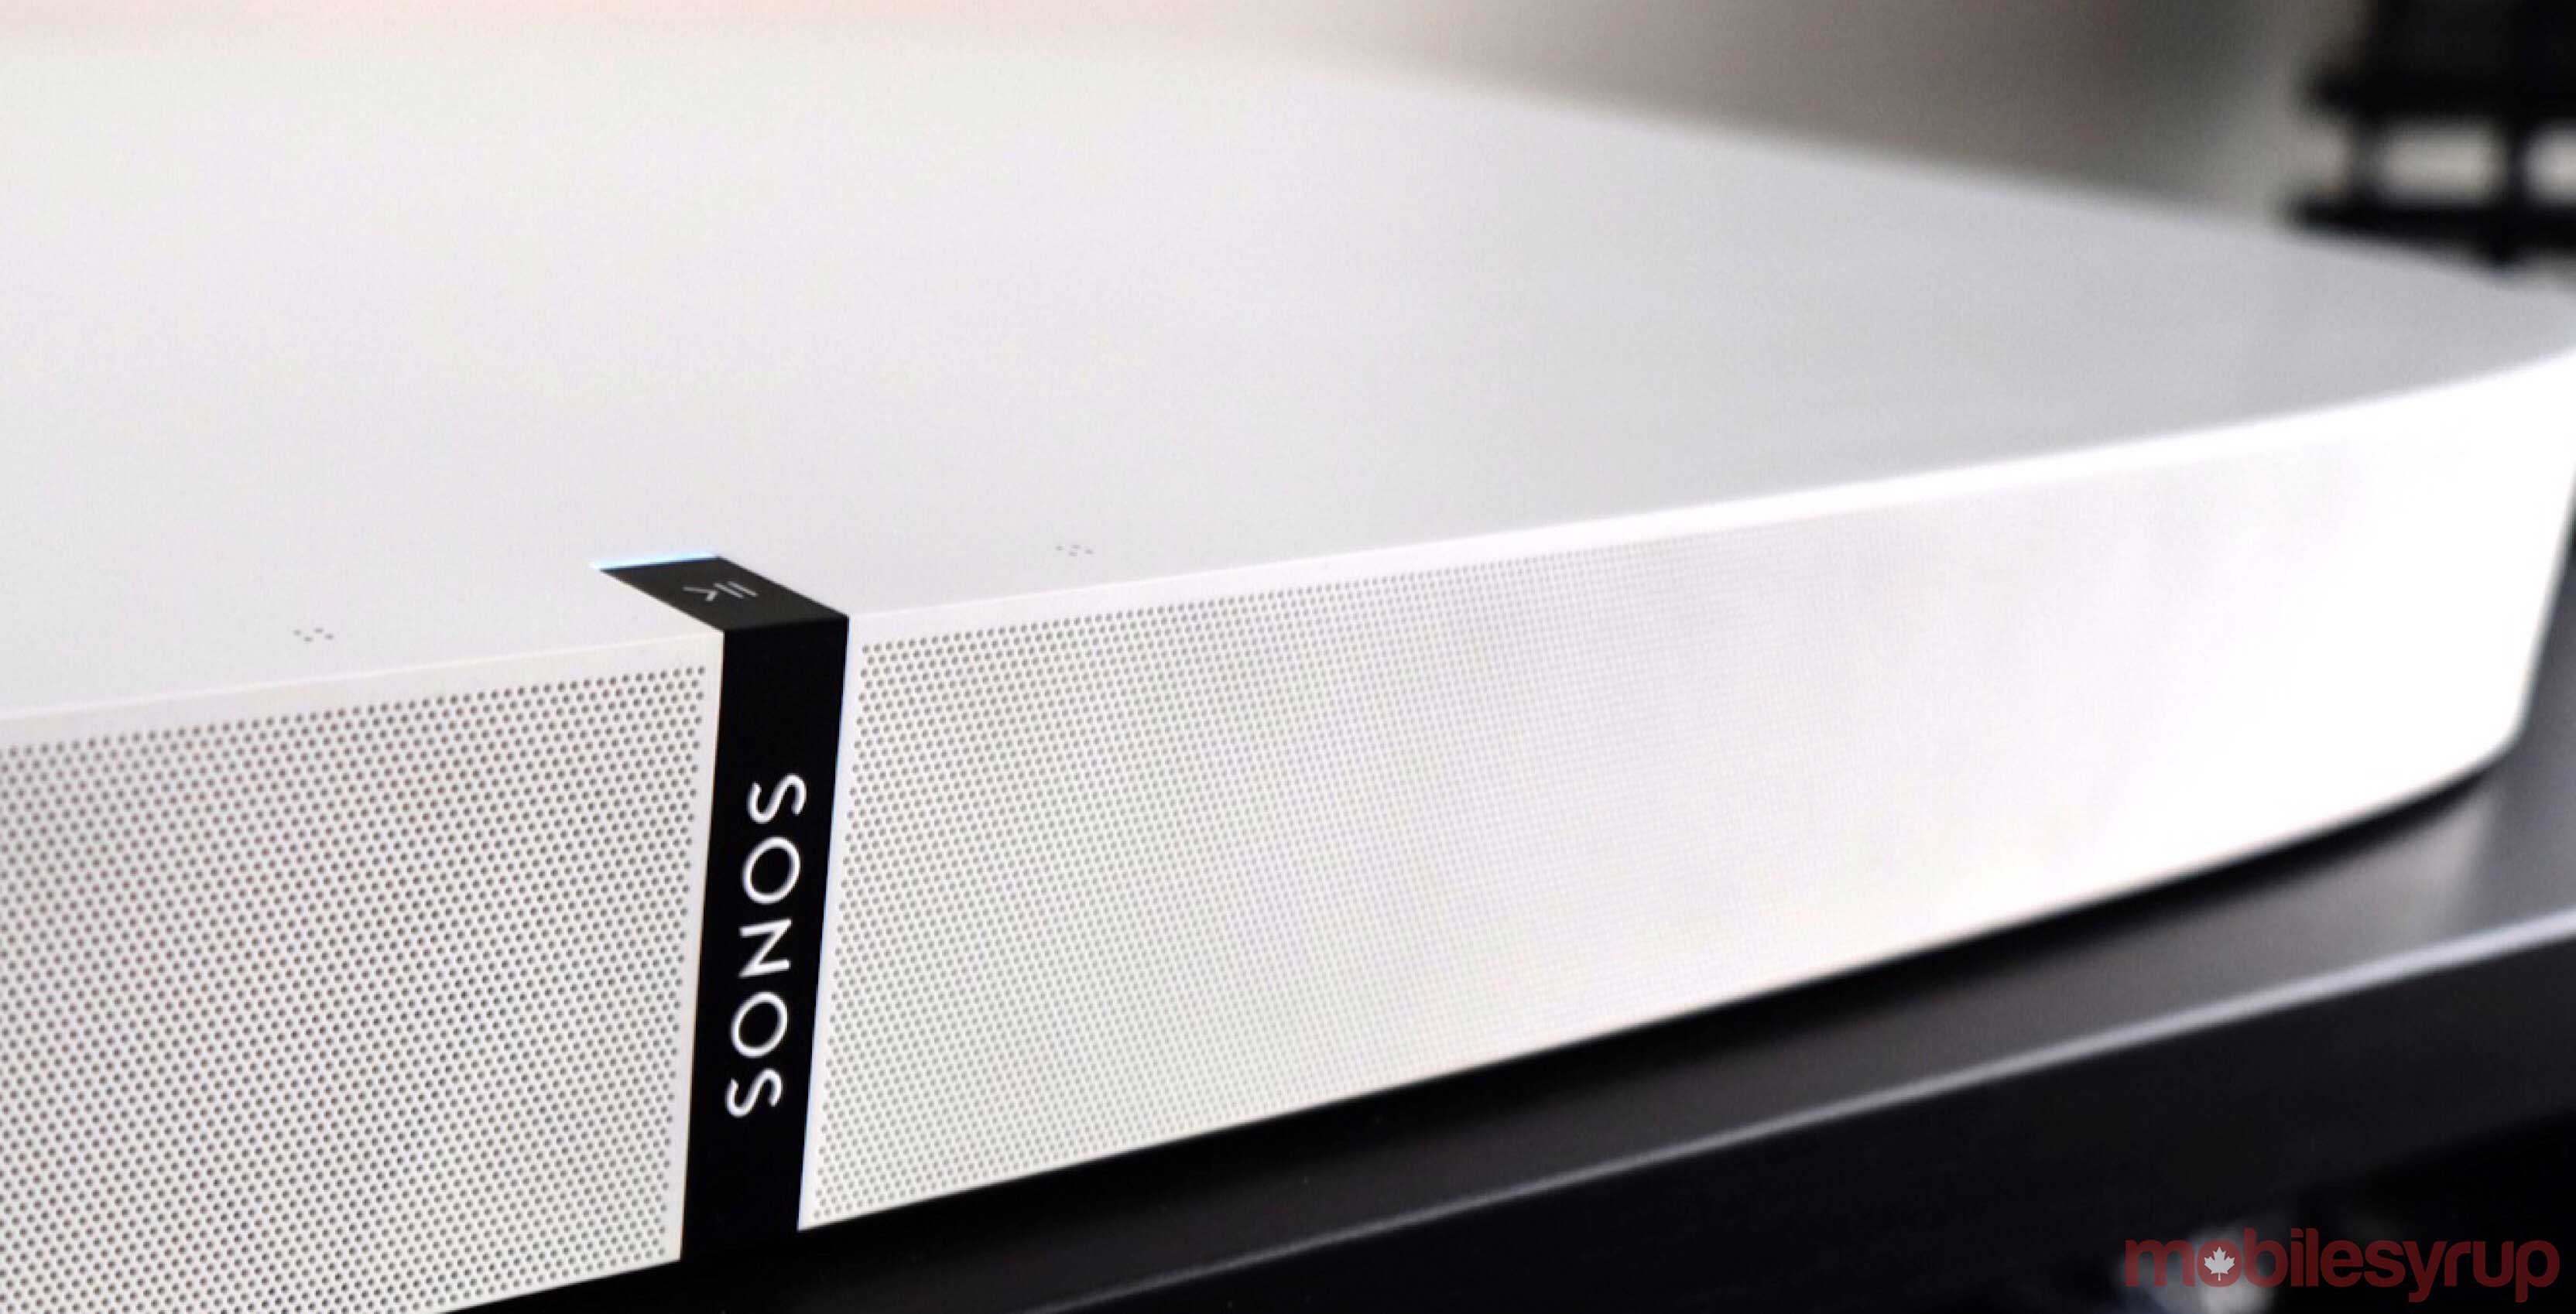 Sonos Playbase The opposite of 'flat' audio